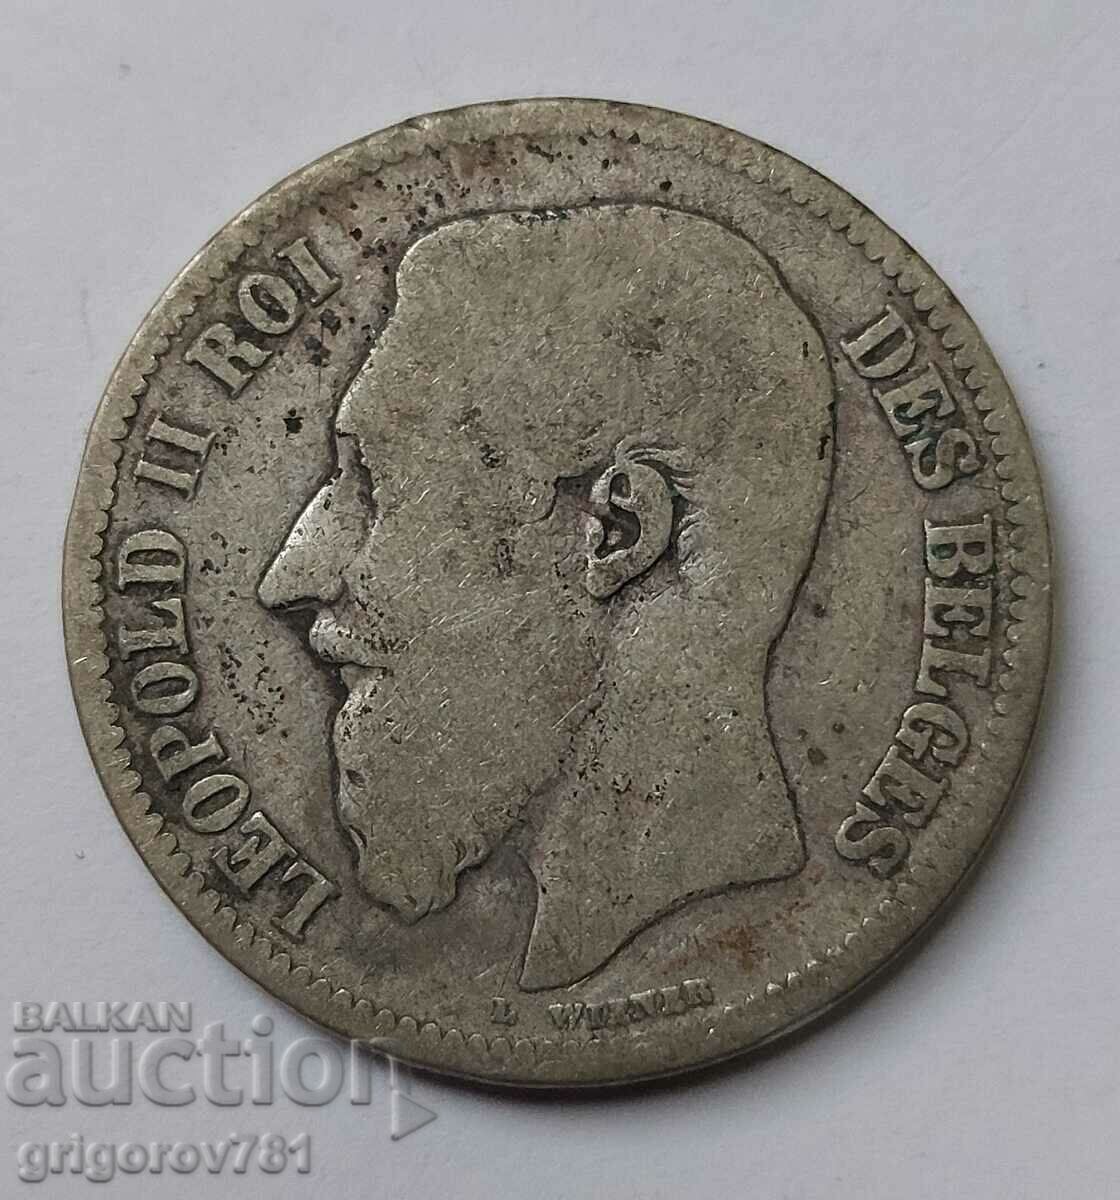 2 Franci Argint Belgia 1867 - Moneda de argint #162